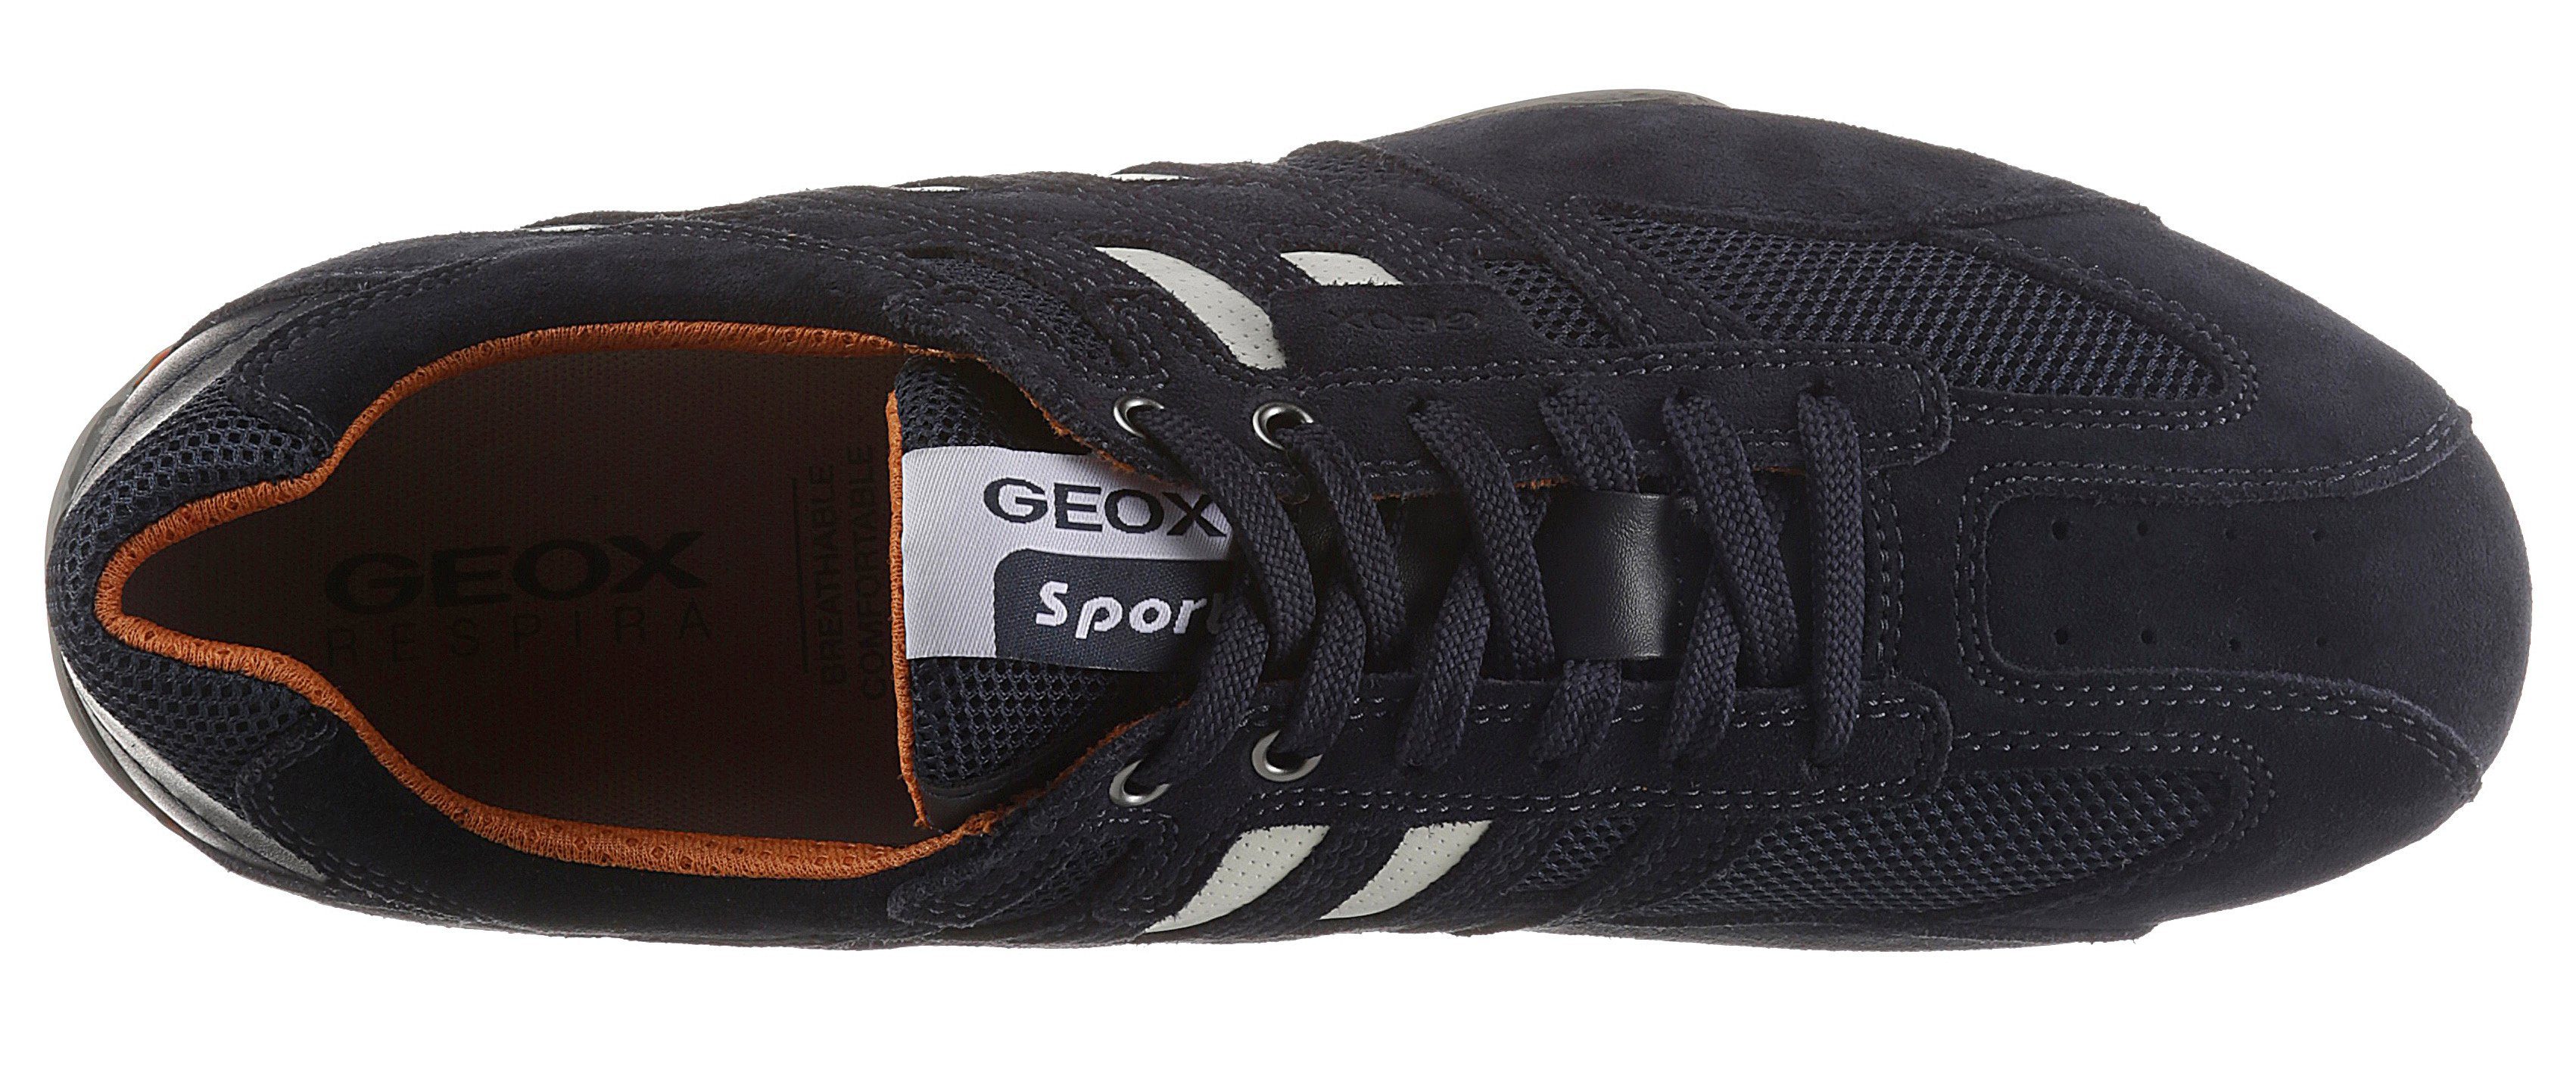 Geox Snake Sneaker im Materialmix dunkelblau mit Geox Membrane Spezial